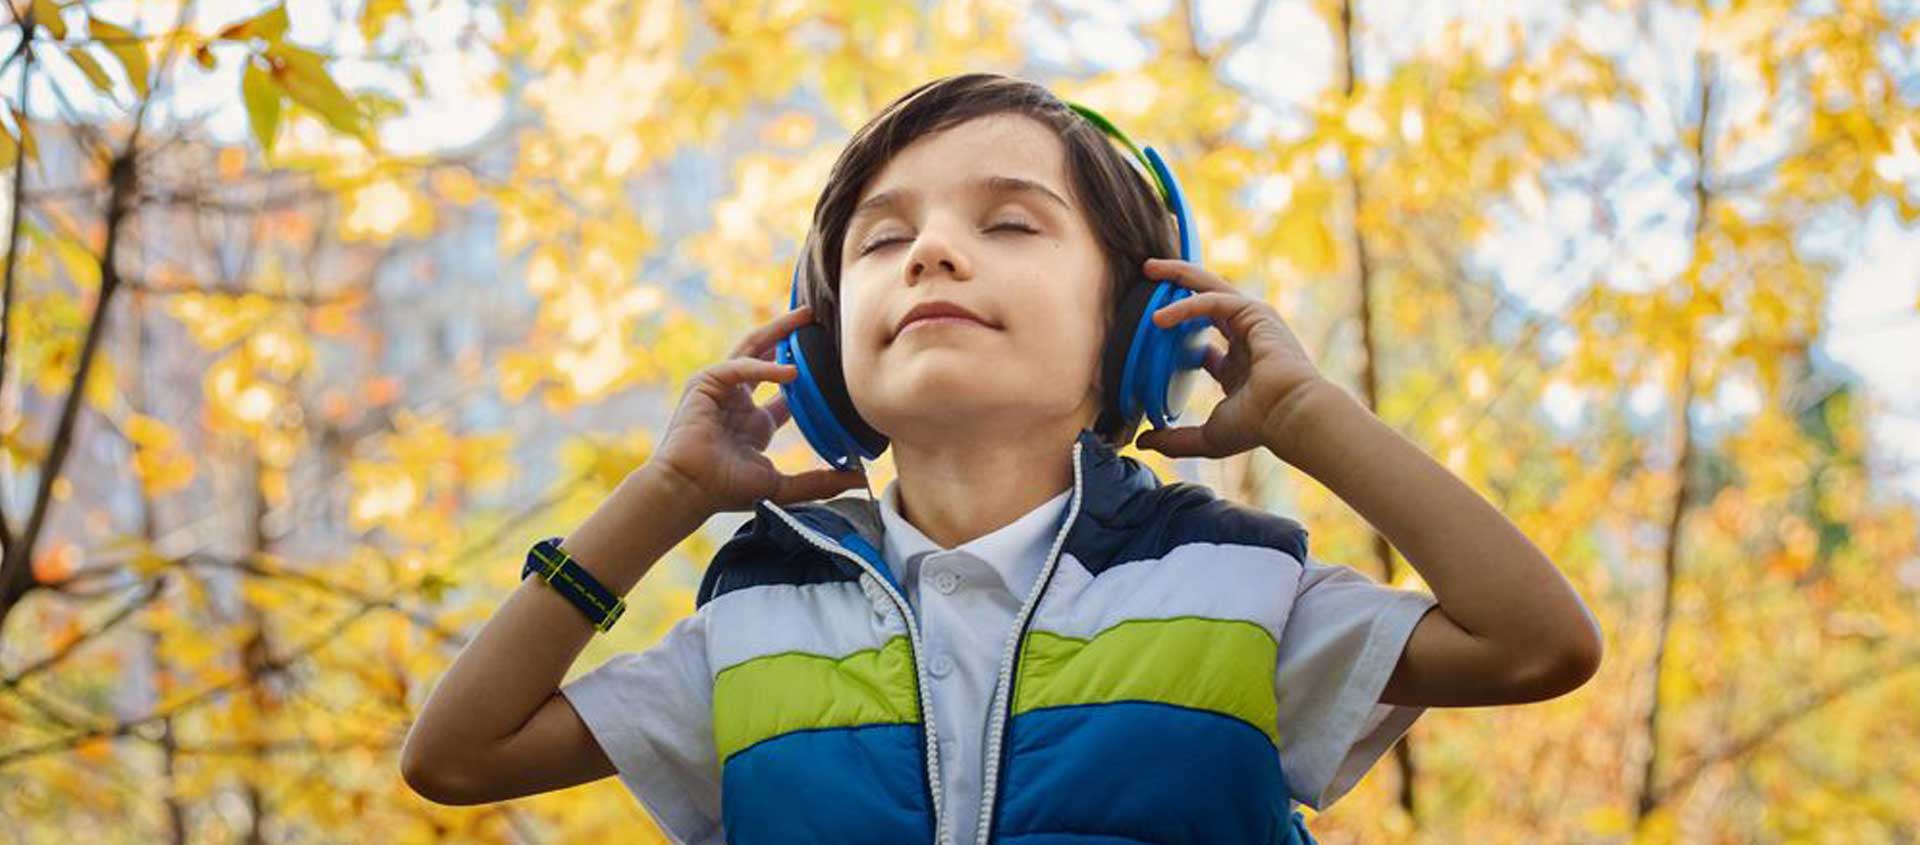 A peaceful-looking boy wearing headphones outdoors.